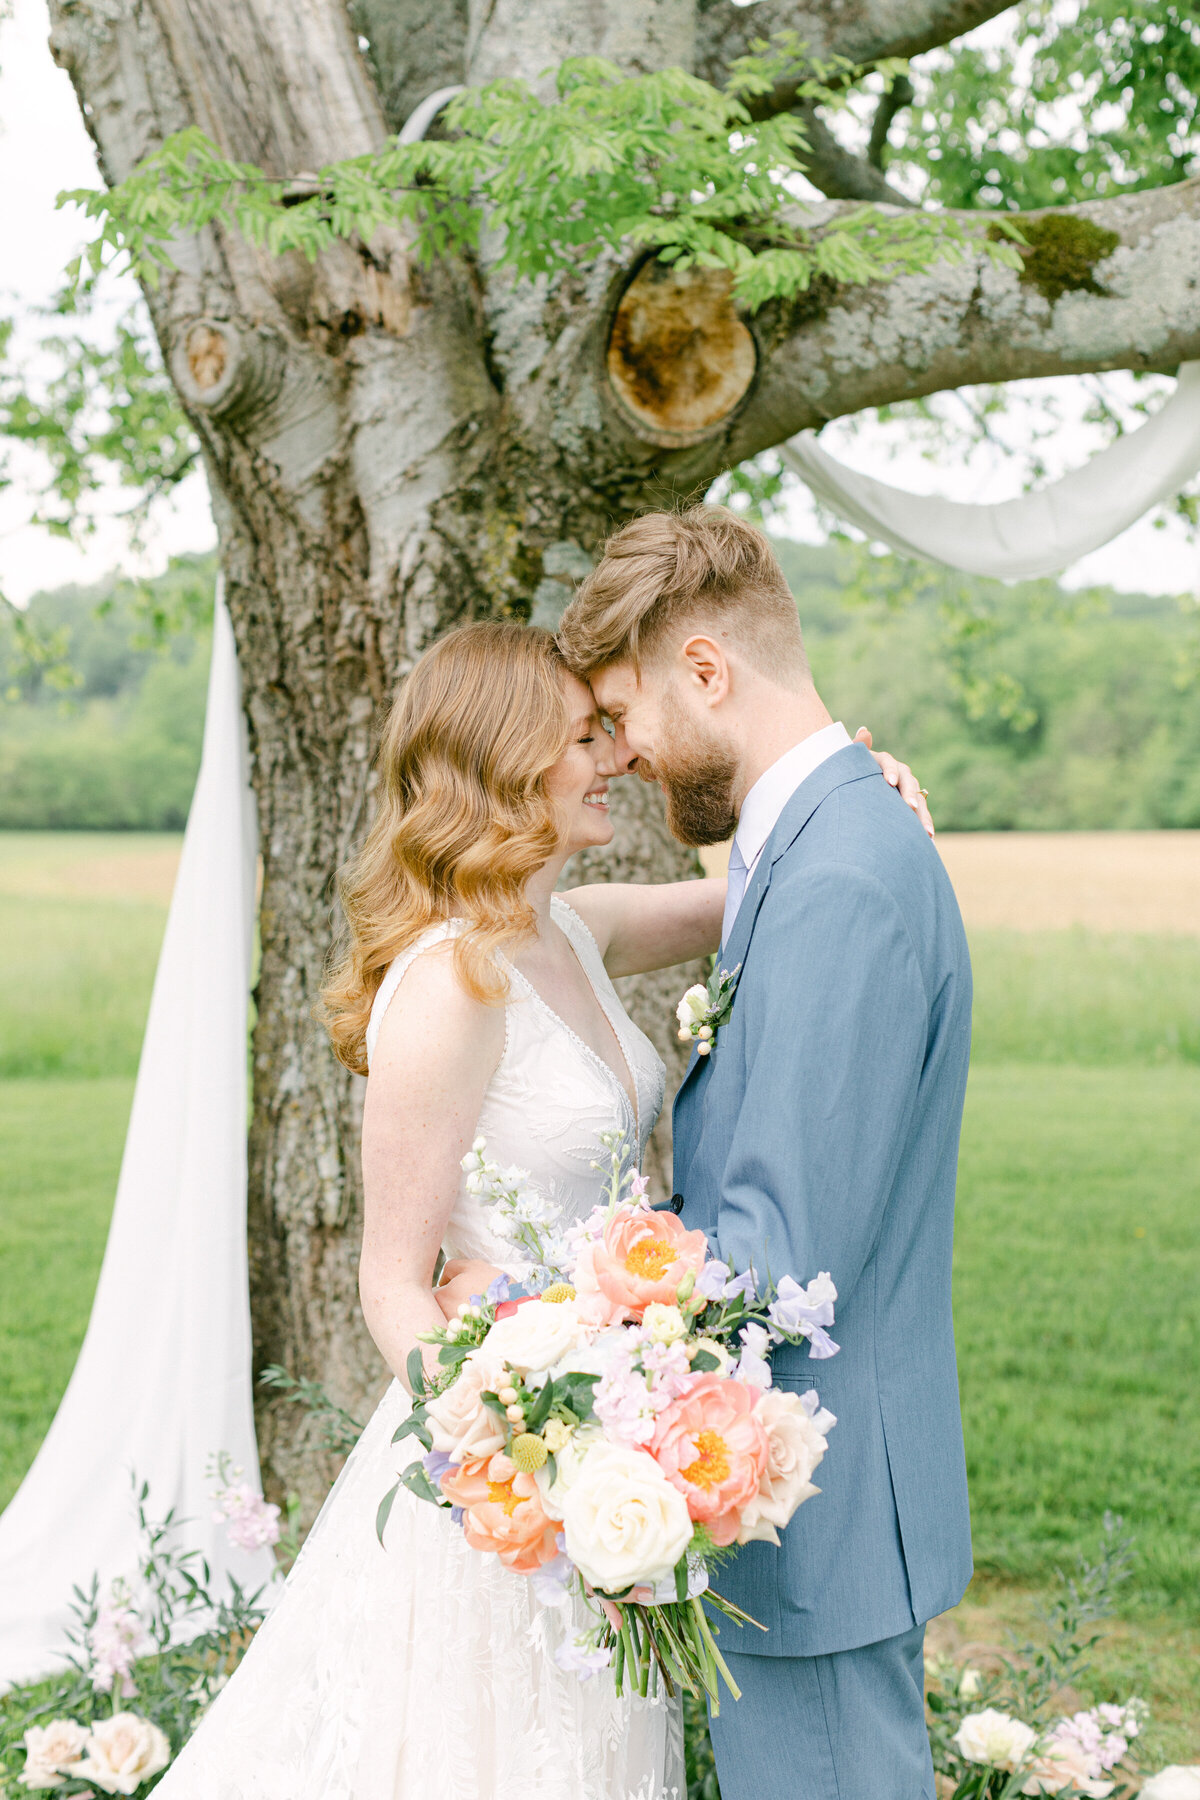 Ava-Vienneau-Nashville-Wedding-Photographer-Southall-Meadows-74